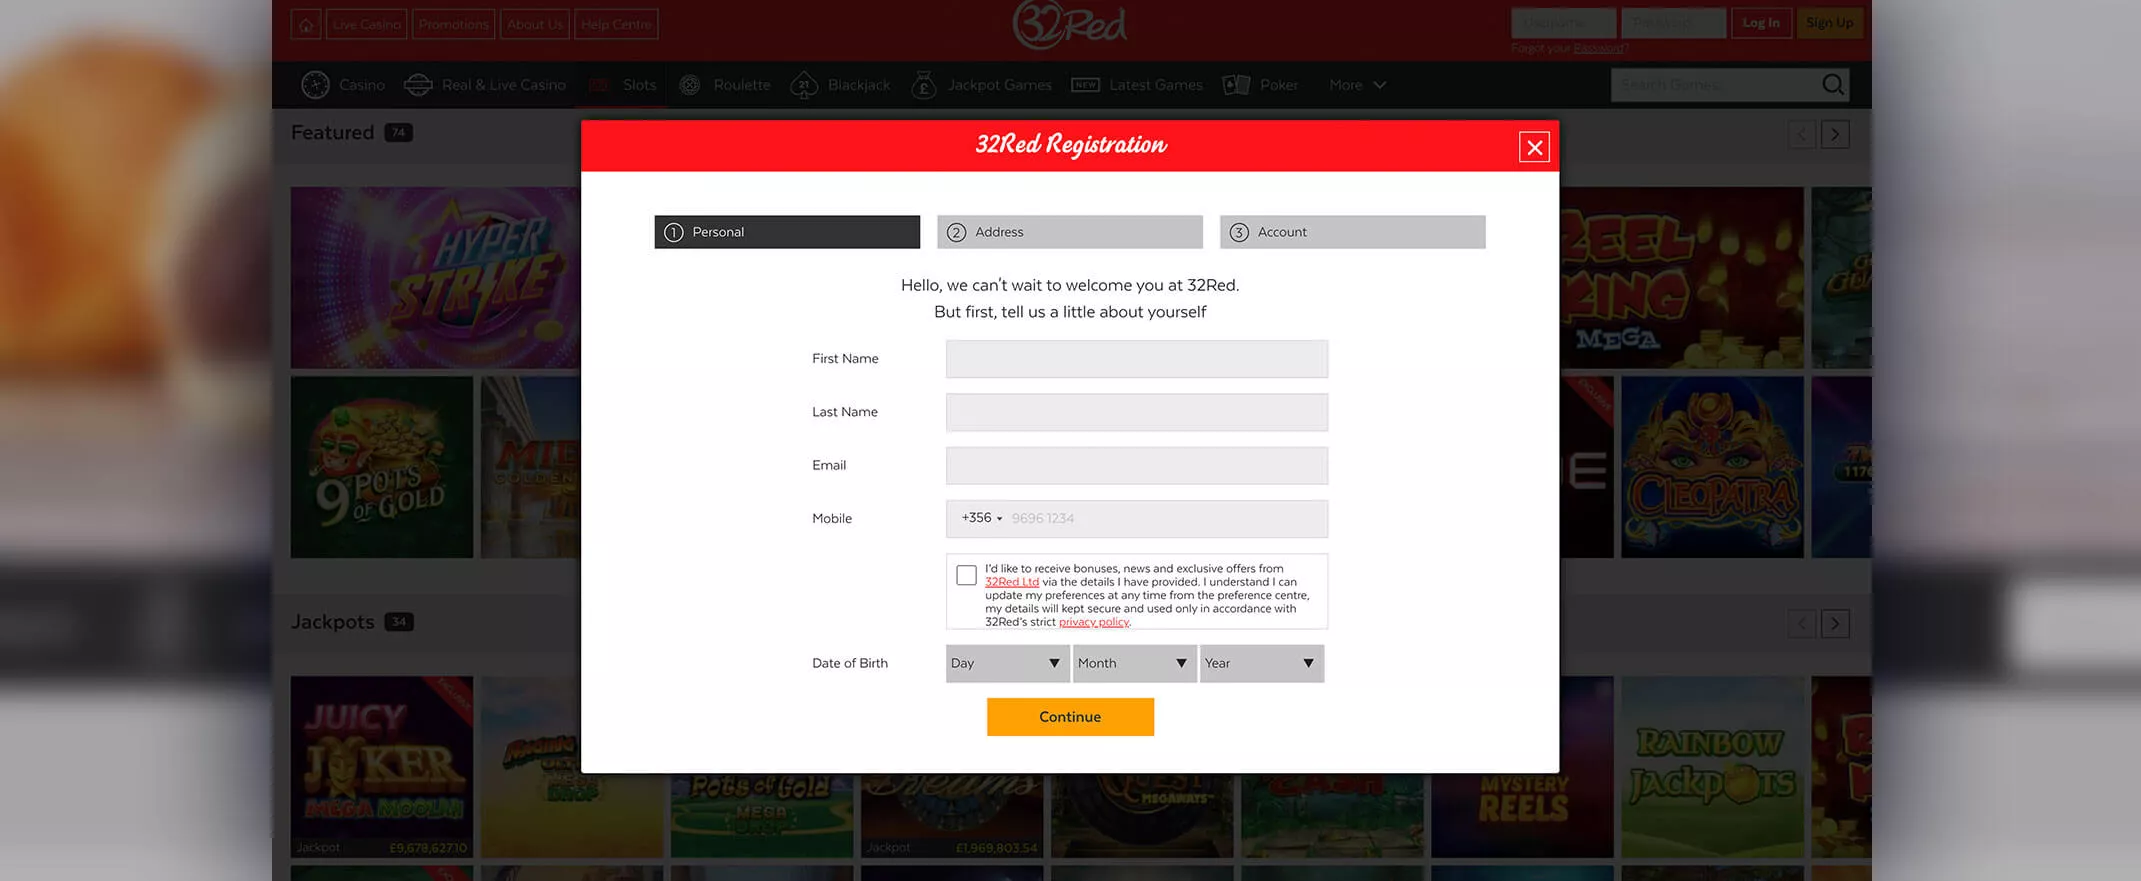 32Red Casino screenshot of the registration process